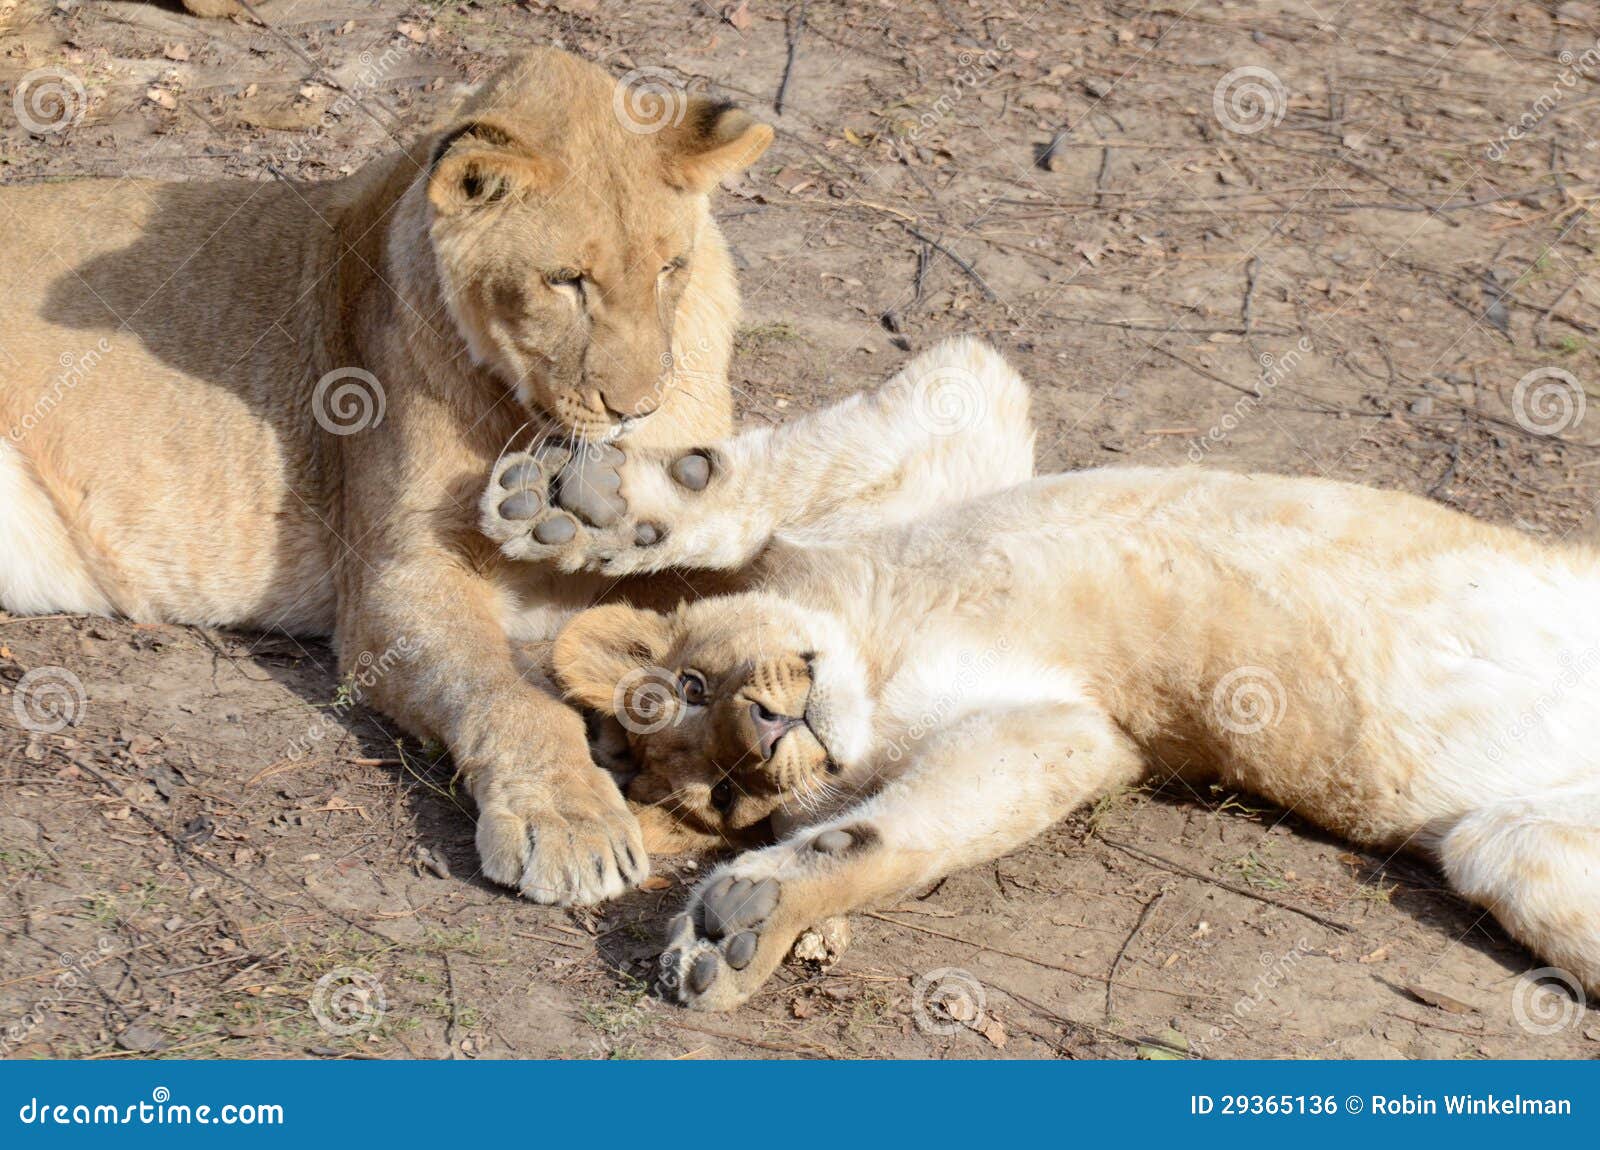 lion sisters cuddle